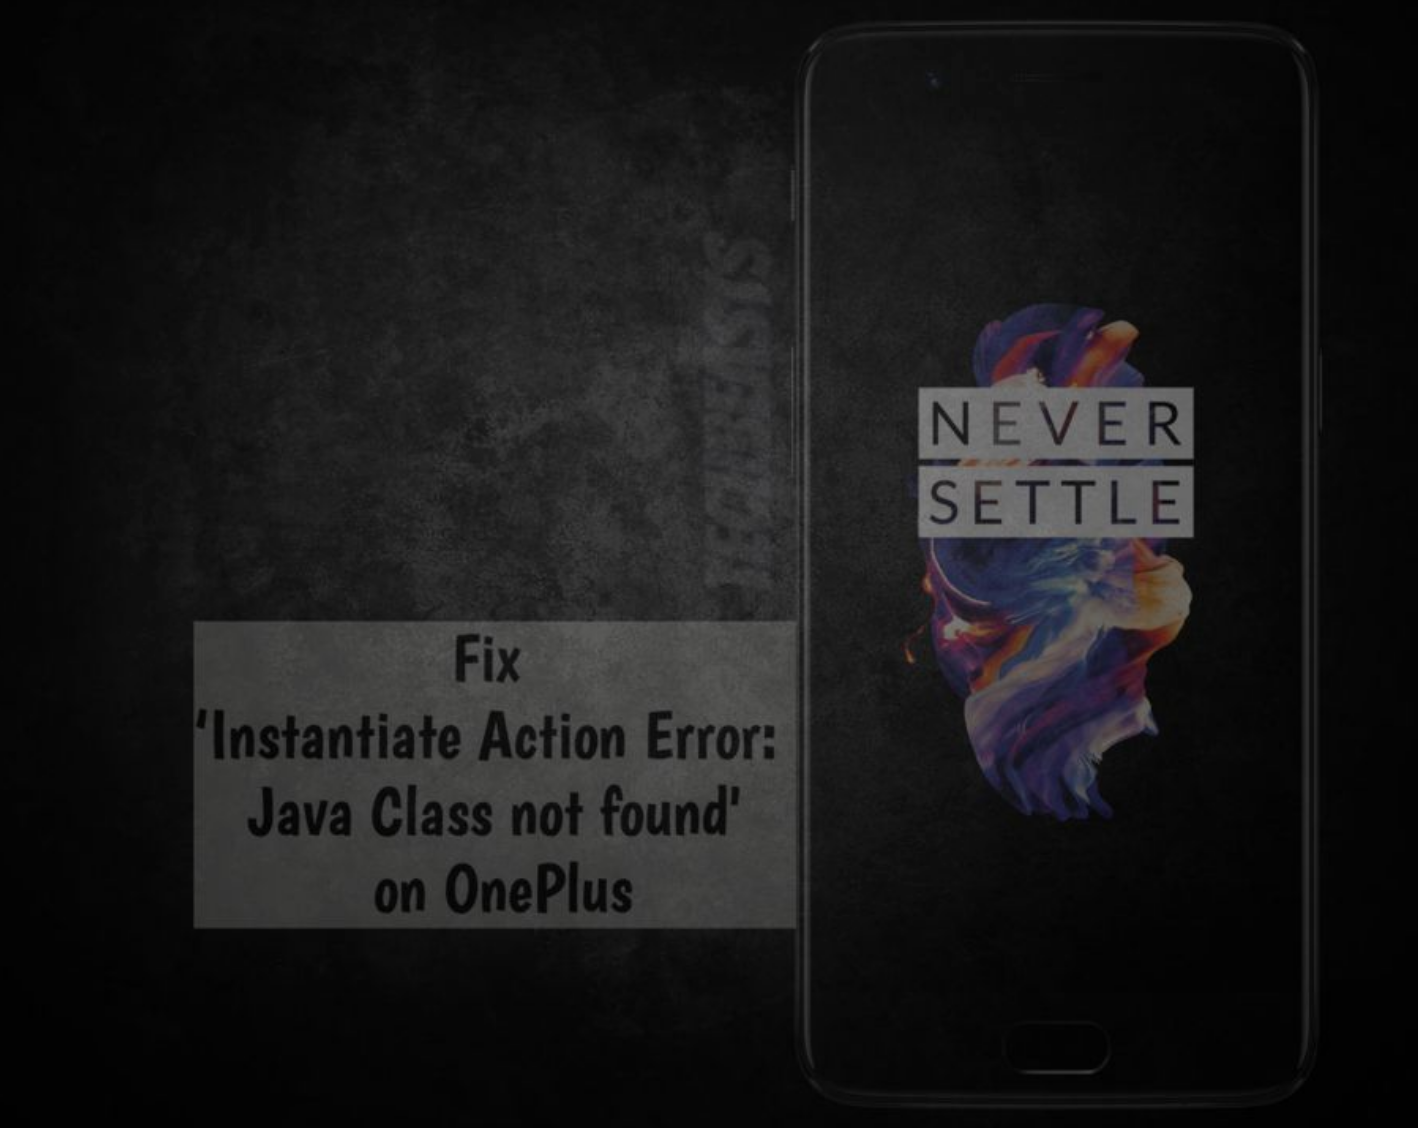 Fix ‘Instantiate Action Error: Java Class not found' on OnePlus